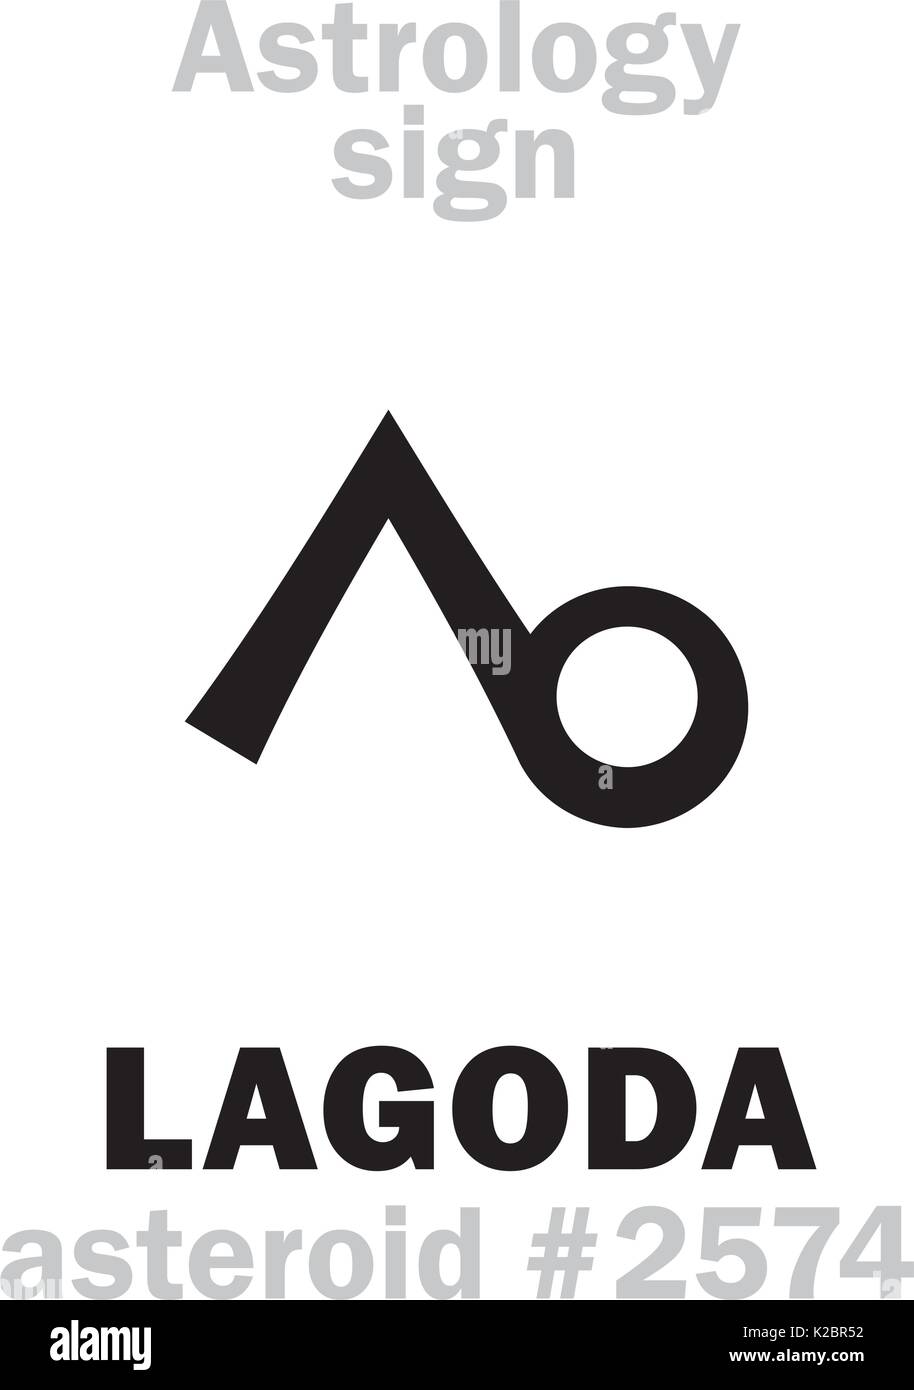 Astrology Alphabet: LAGODA, asteroid #2574. Hieroglyphics character sign (single symbol). Stock Vector